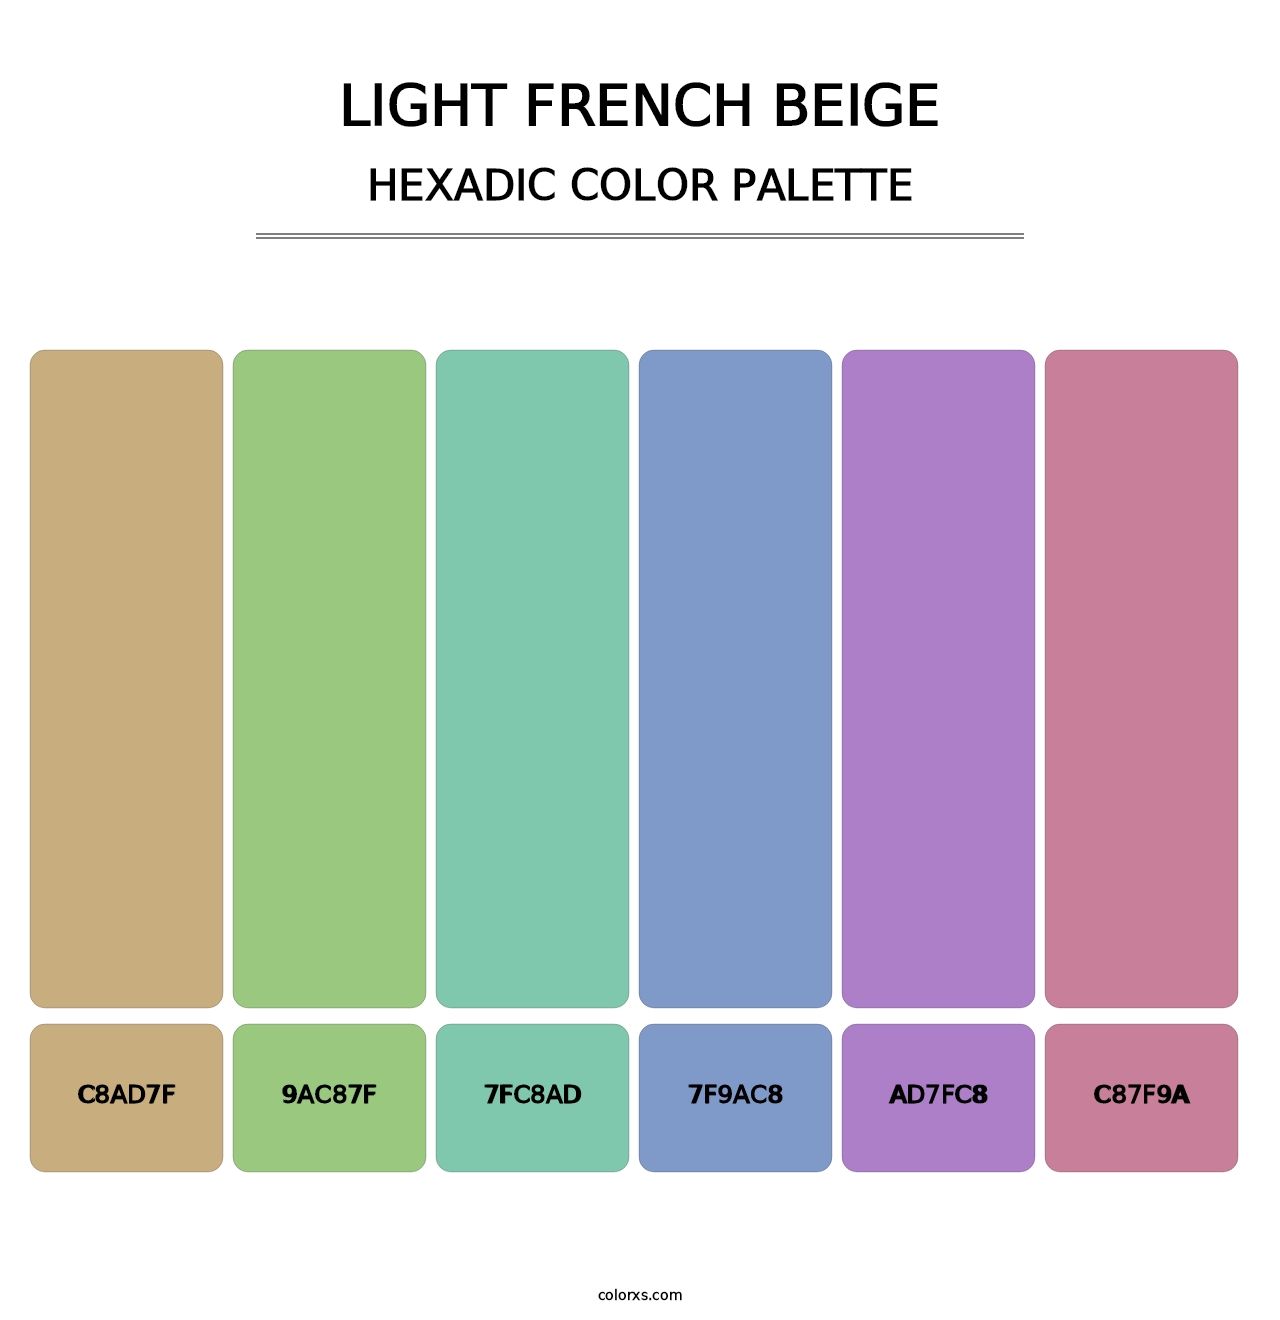 Light French Beige - Hexadic Color Palette